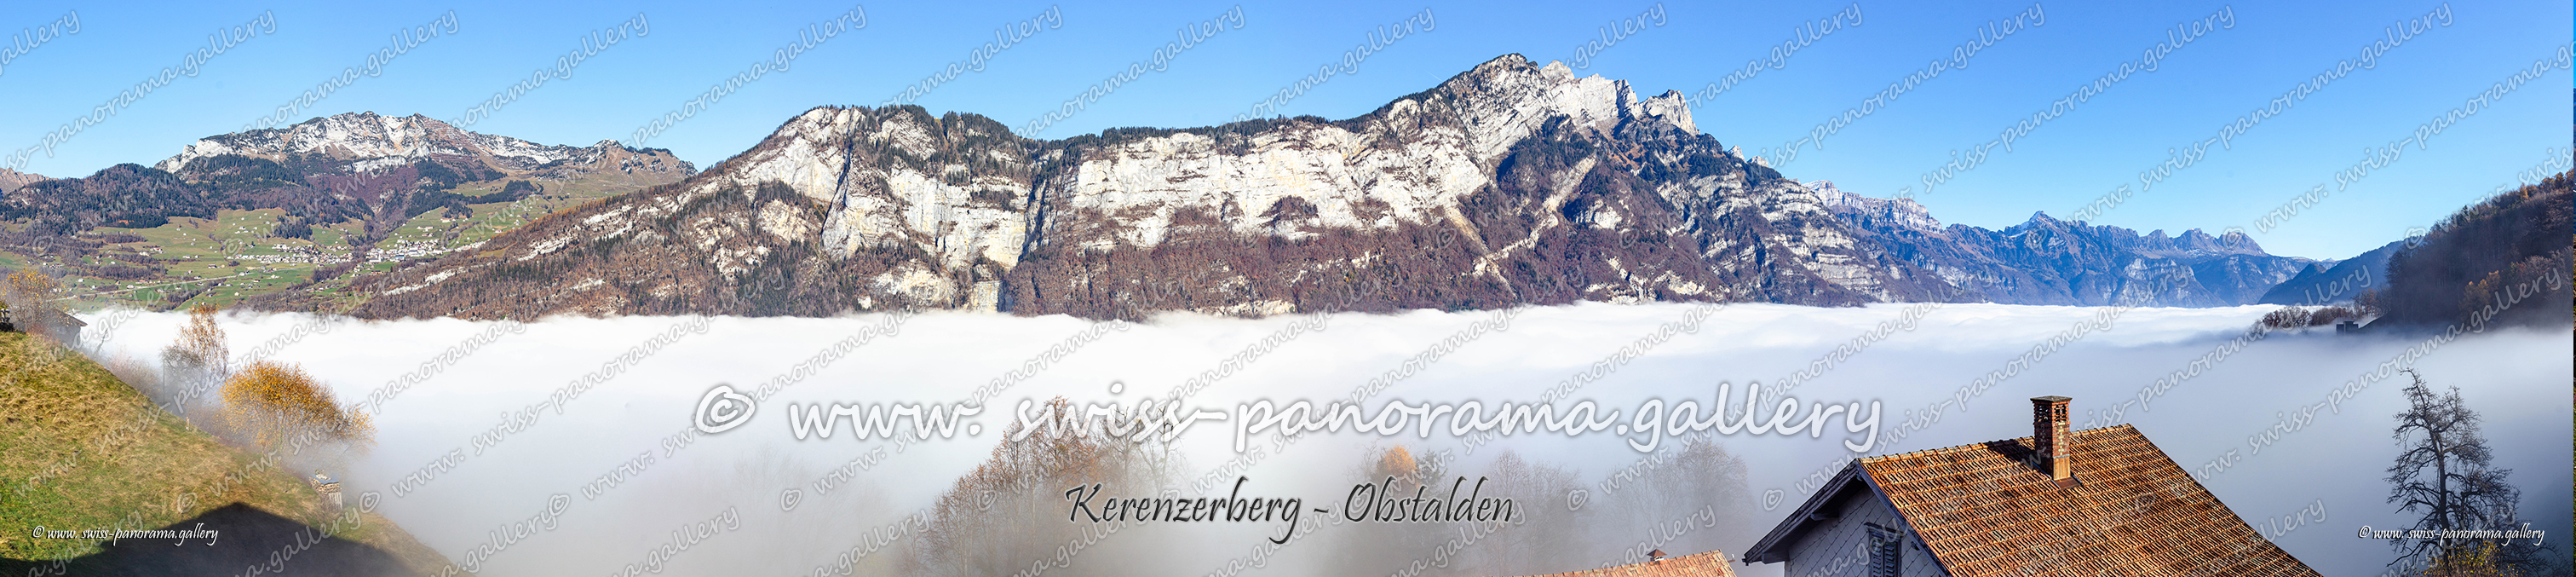 Kerenzerberg Obstalden Alpenpanorama